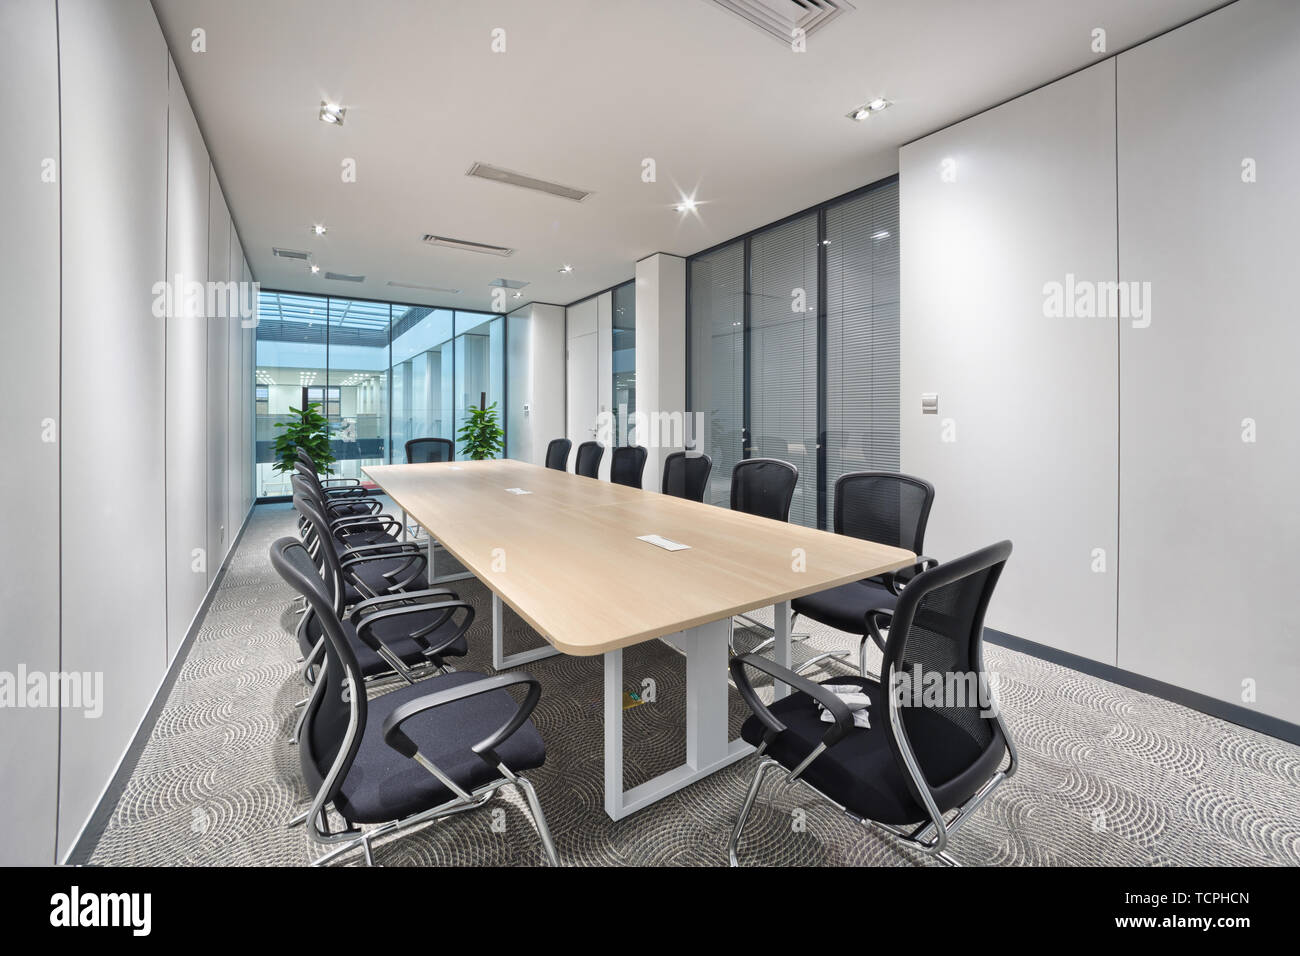 Modern Office Meeting Room Interior Stock Photo 248817653